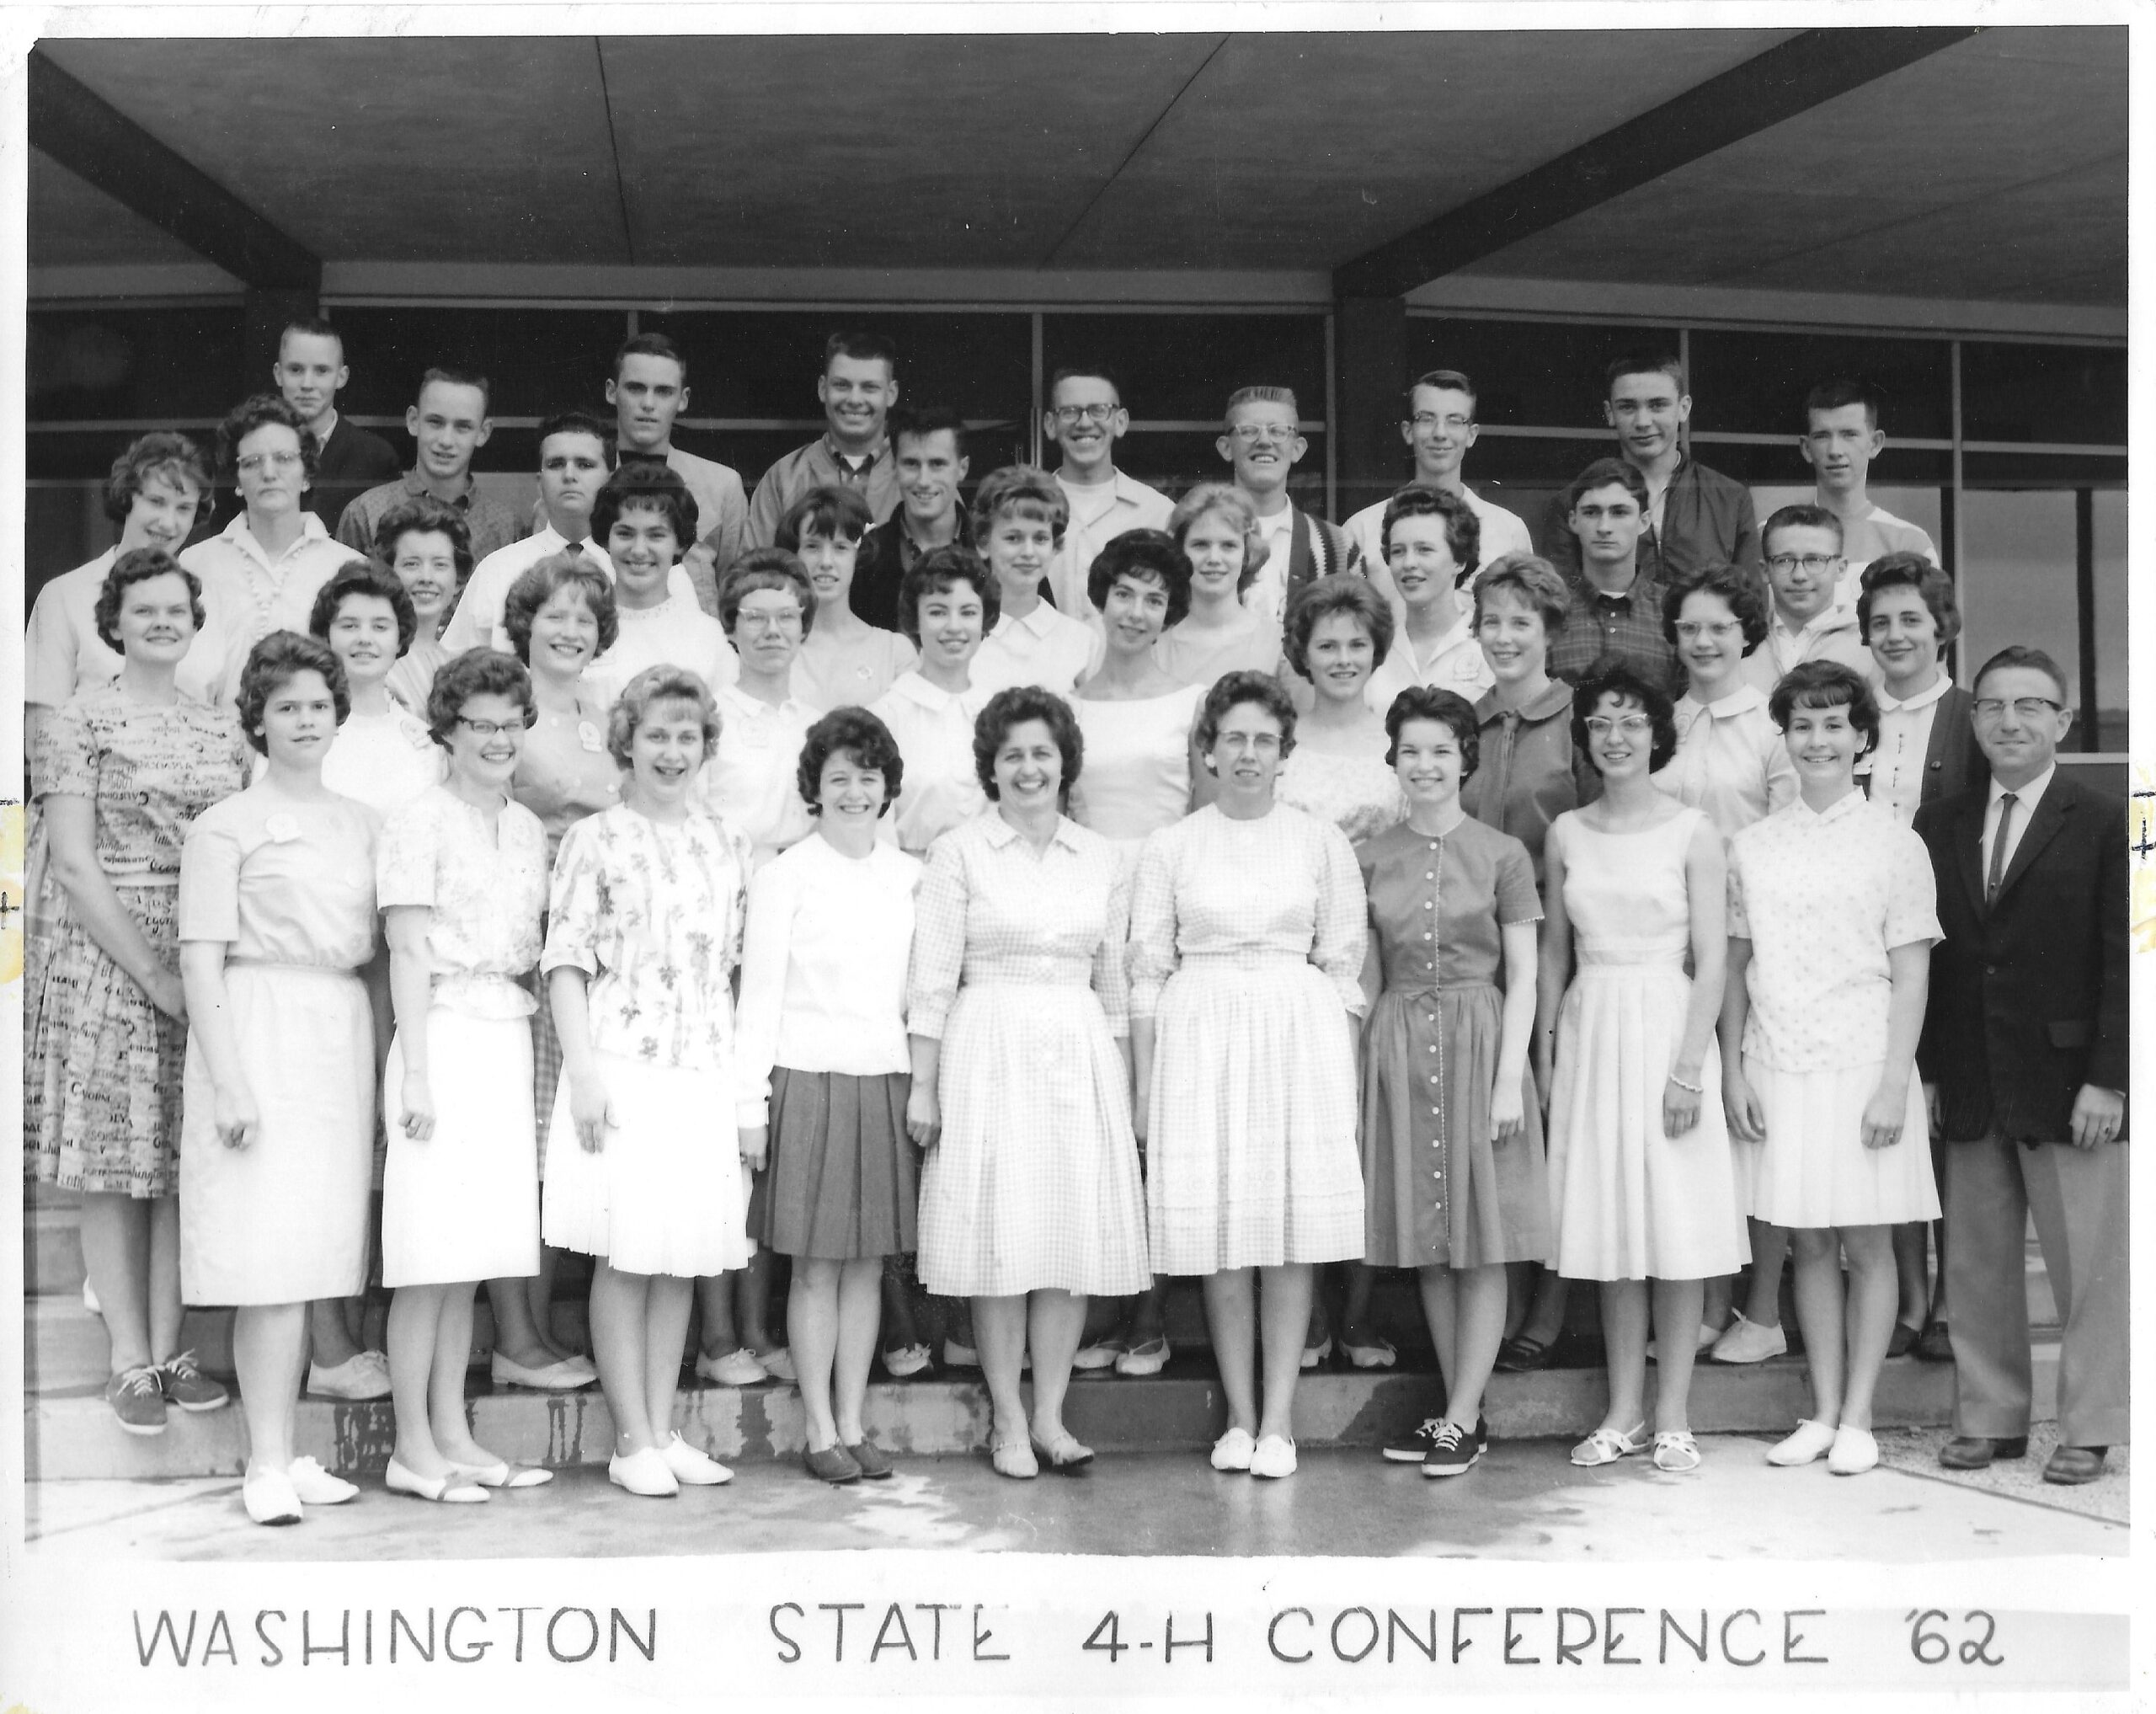 Washington State 4-H Conference 1962